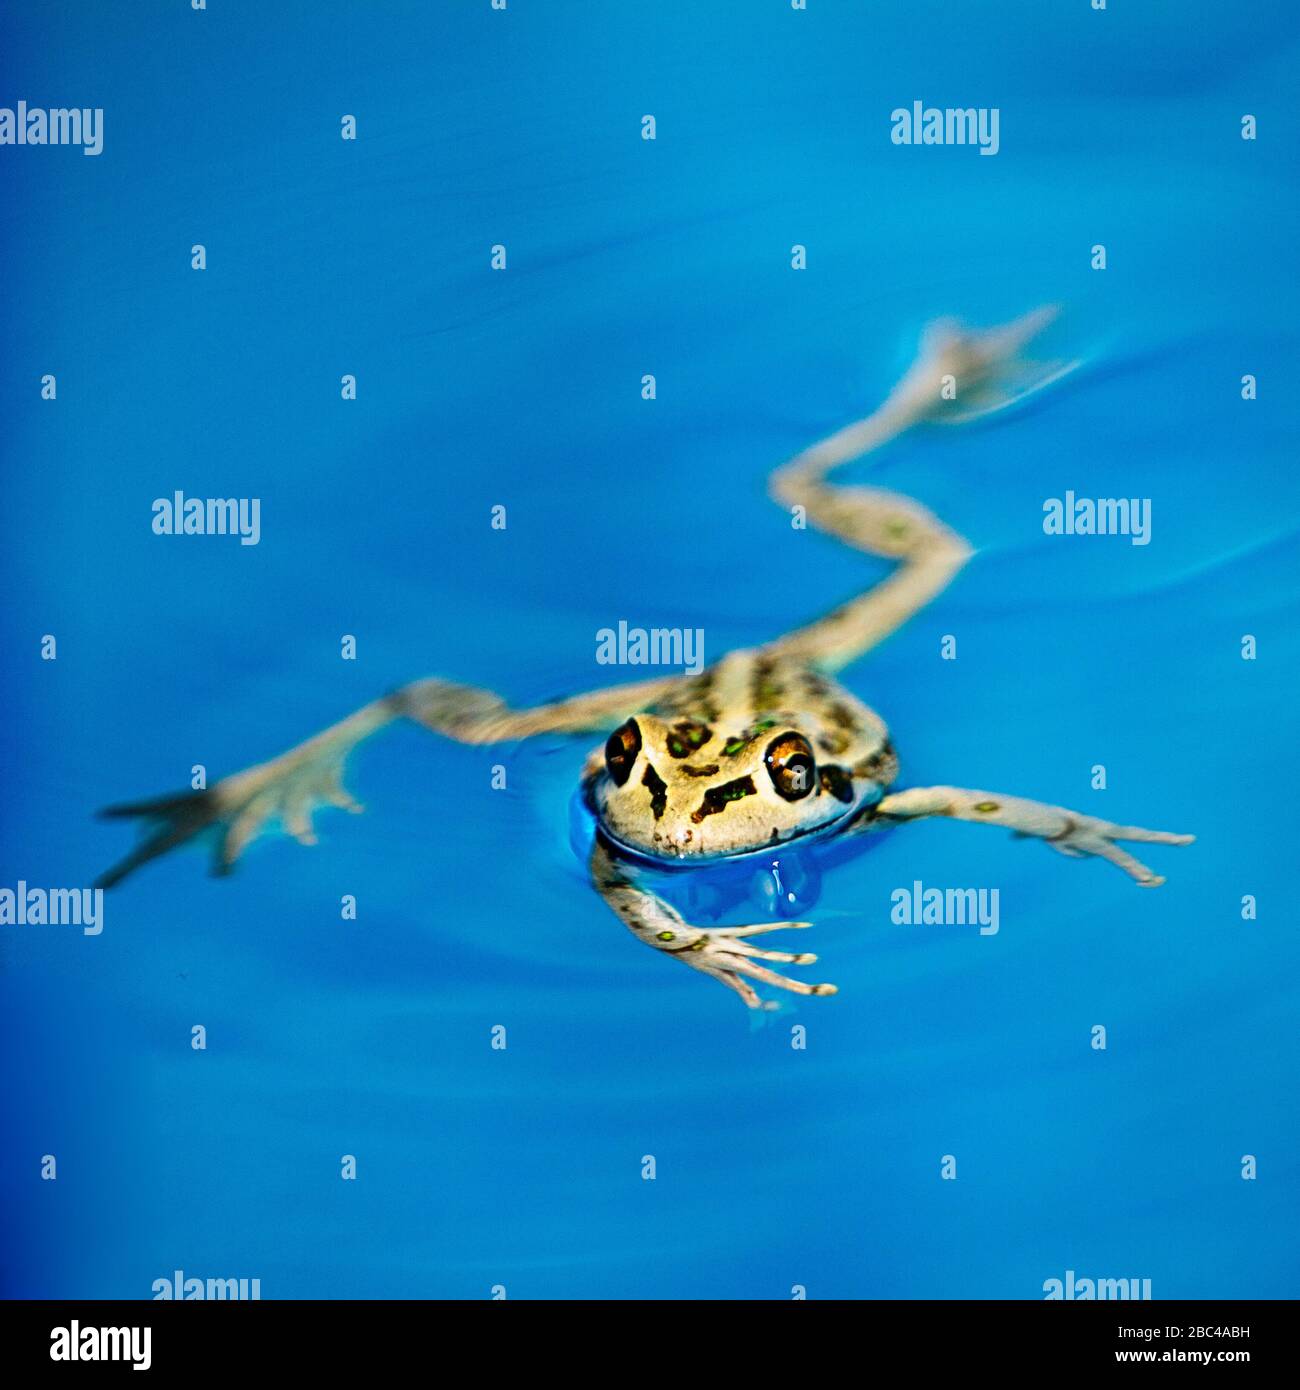 Motorbike frog in swimming pool Stock Photo